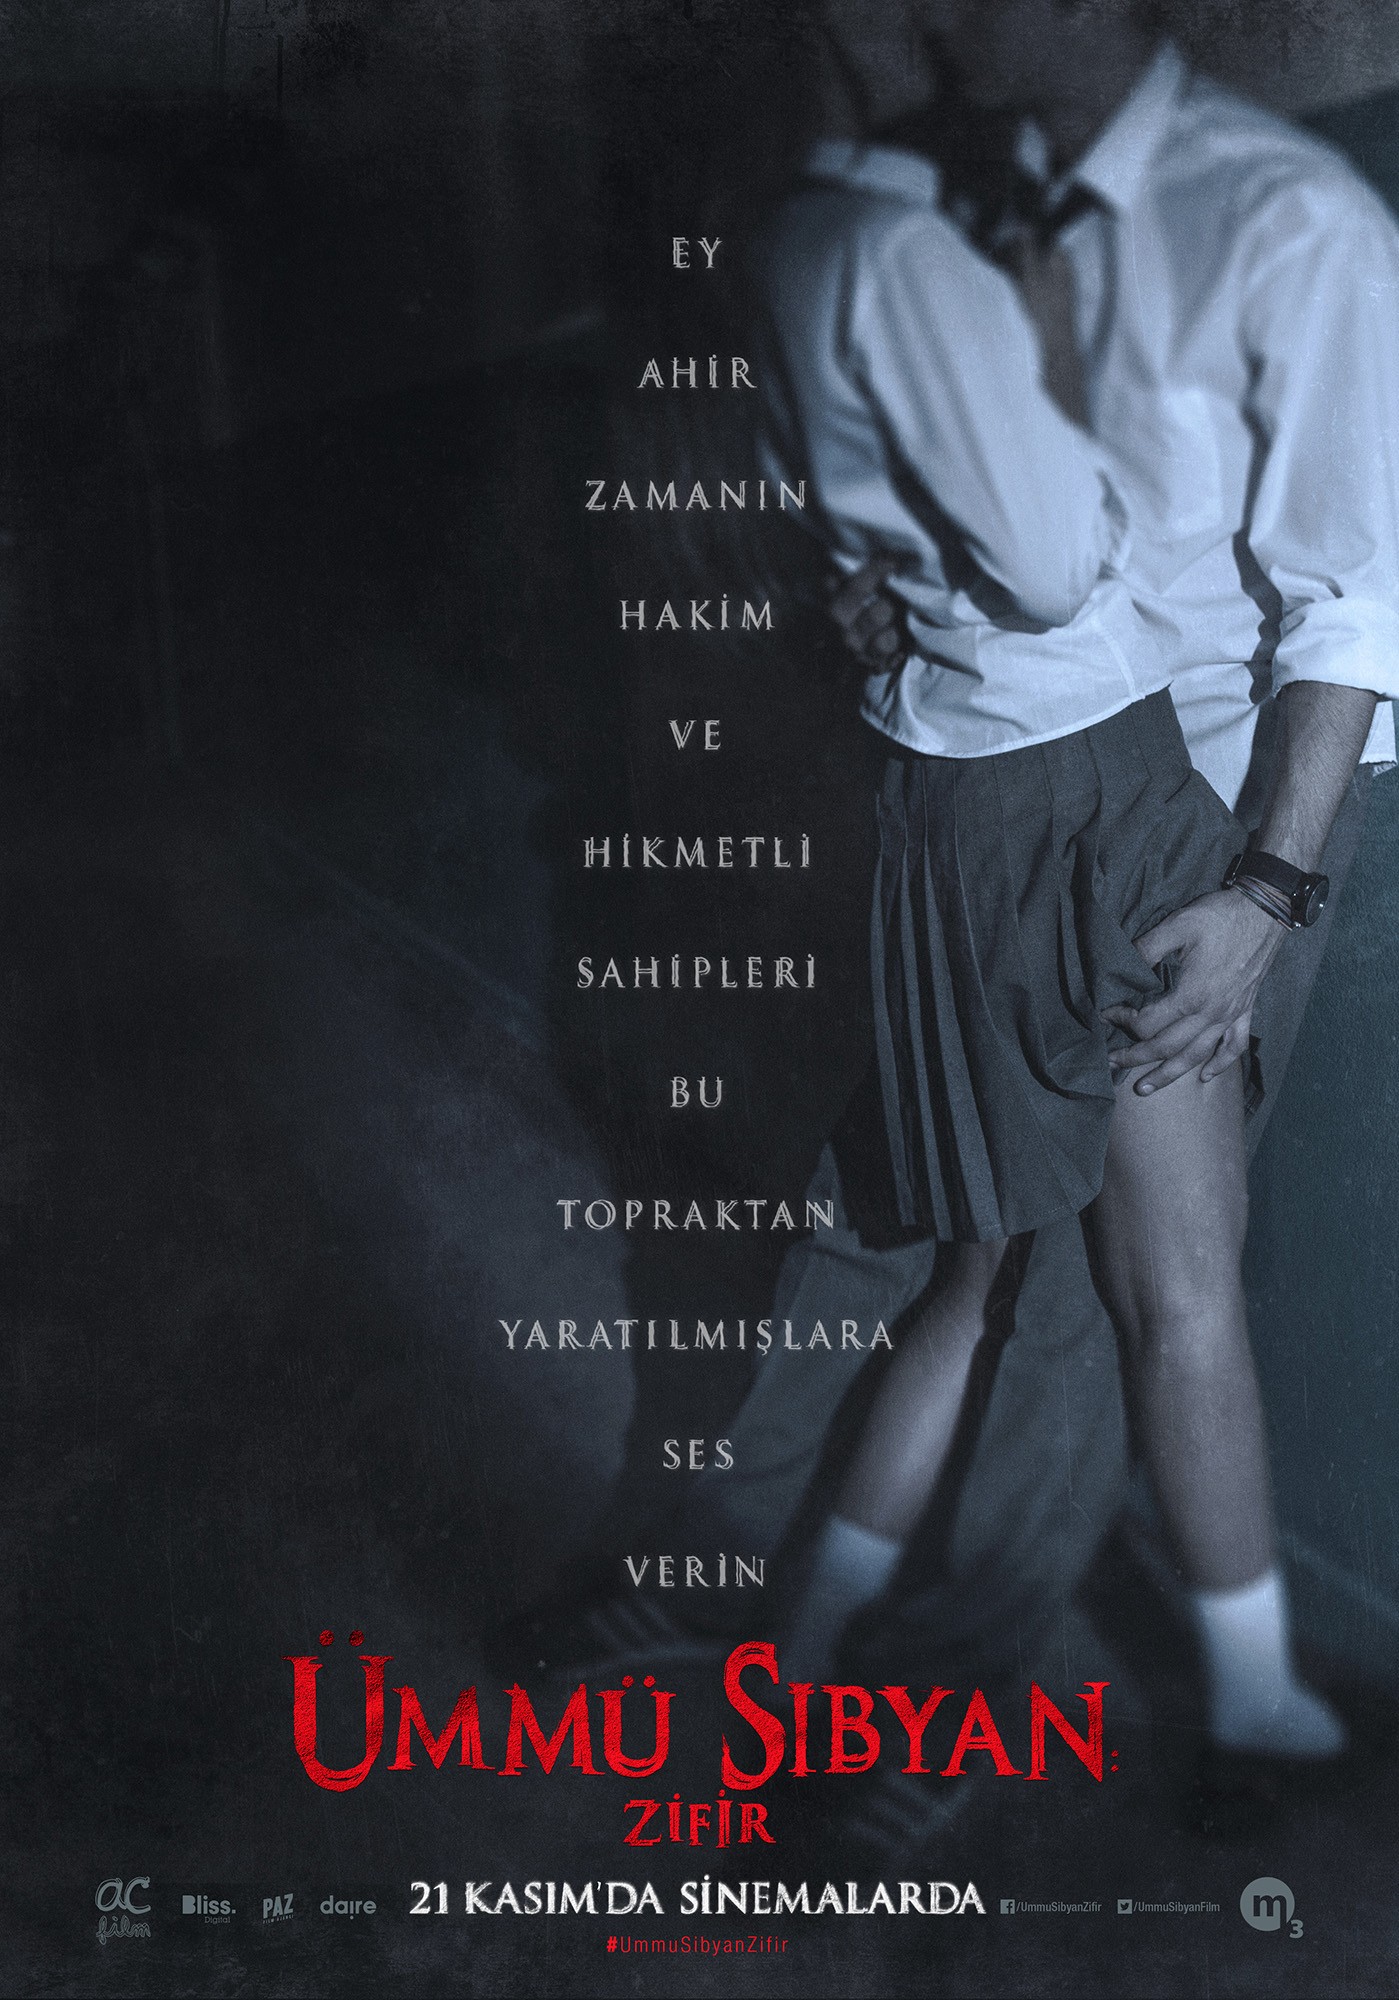 Mega Sized Movie Poster Image for Ümmü Sıbyan Zifir (#7 of 12)